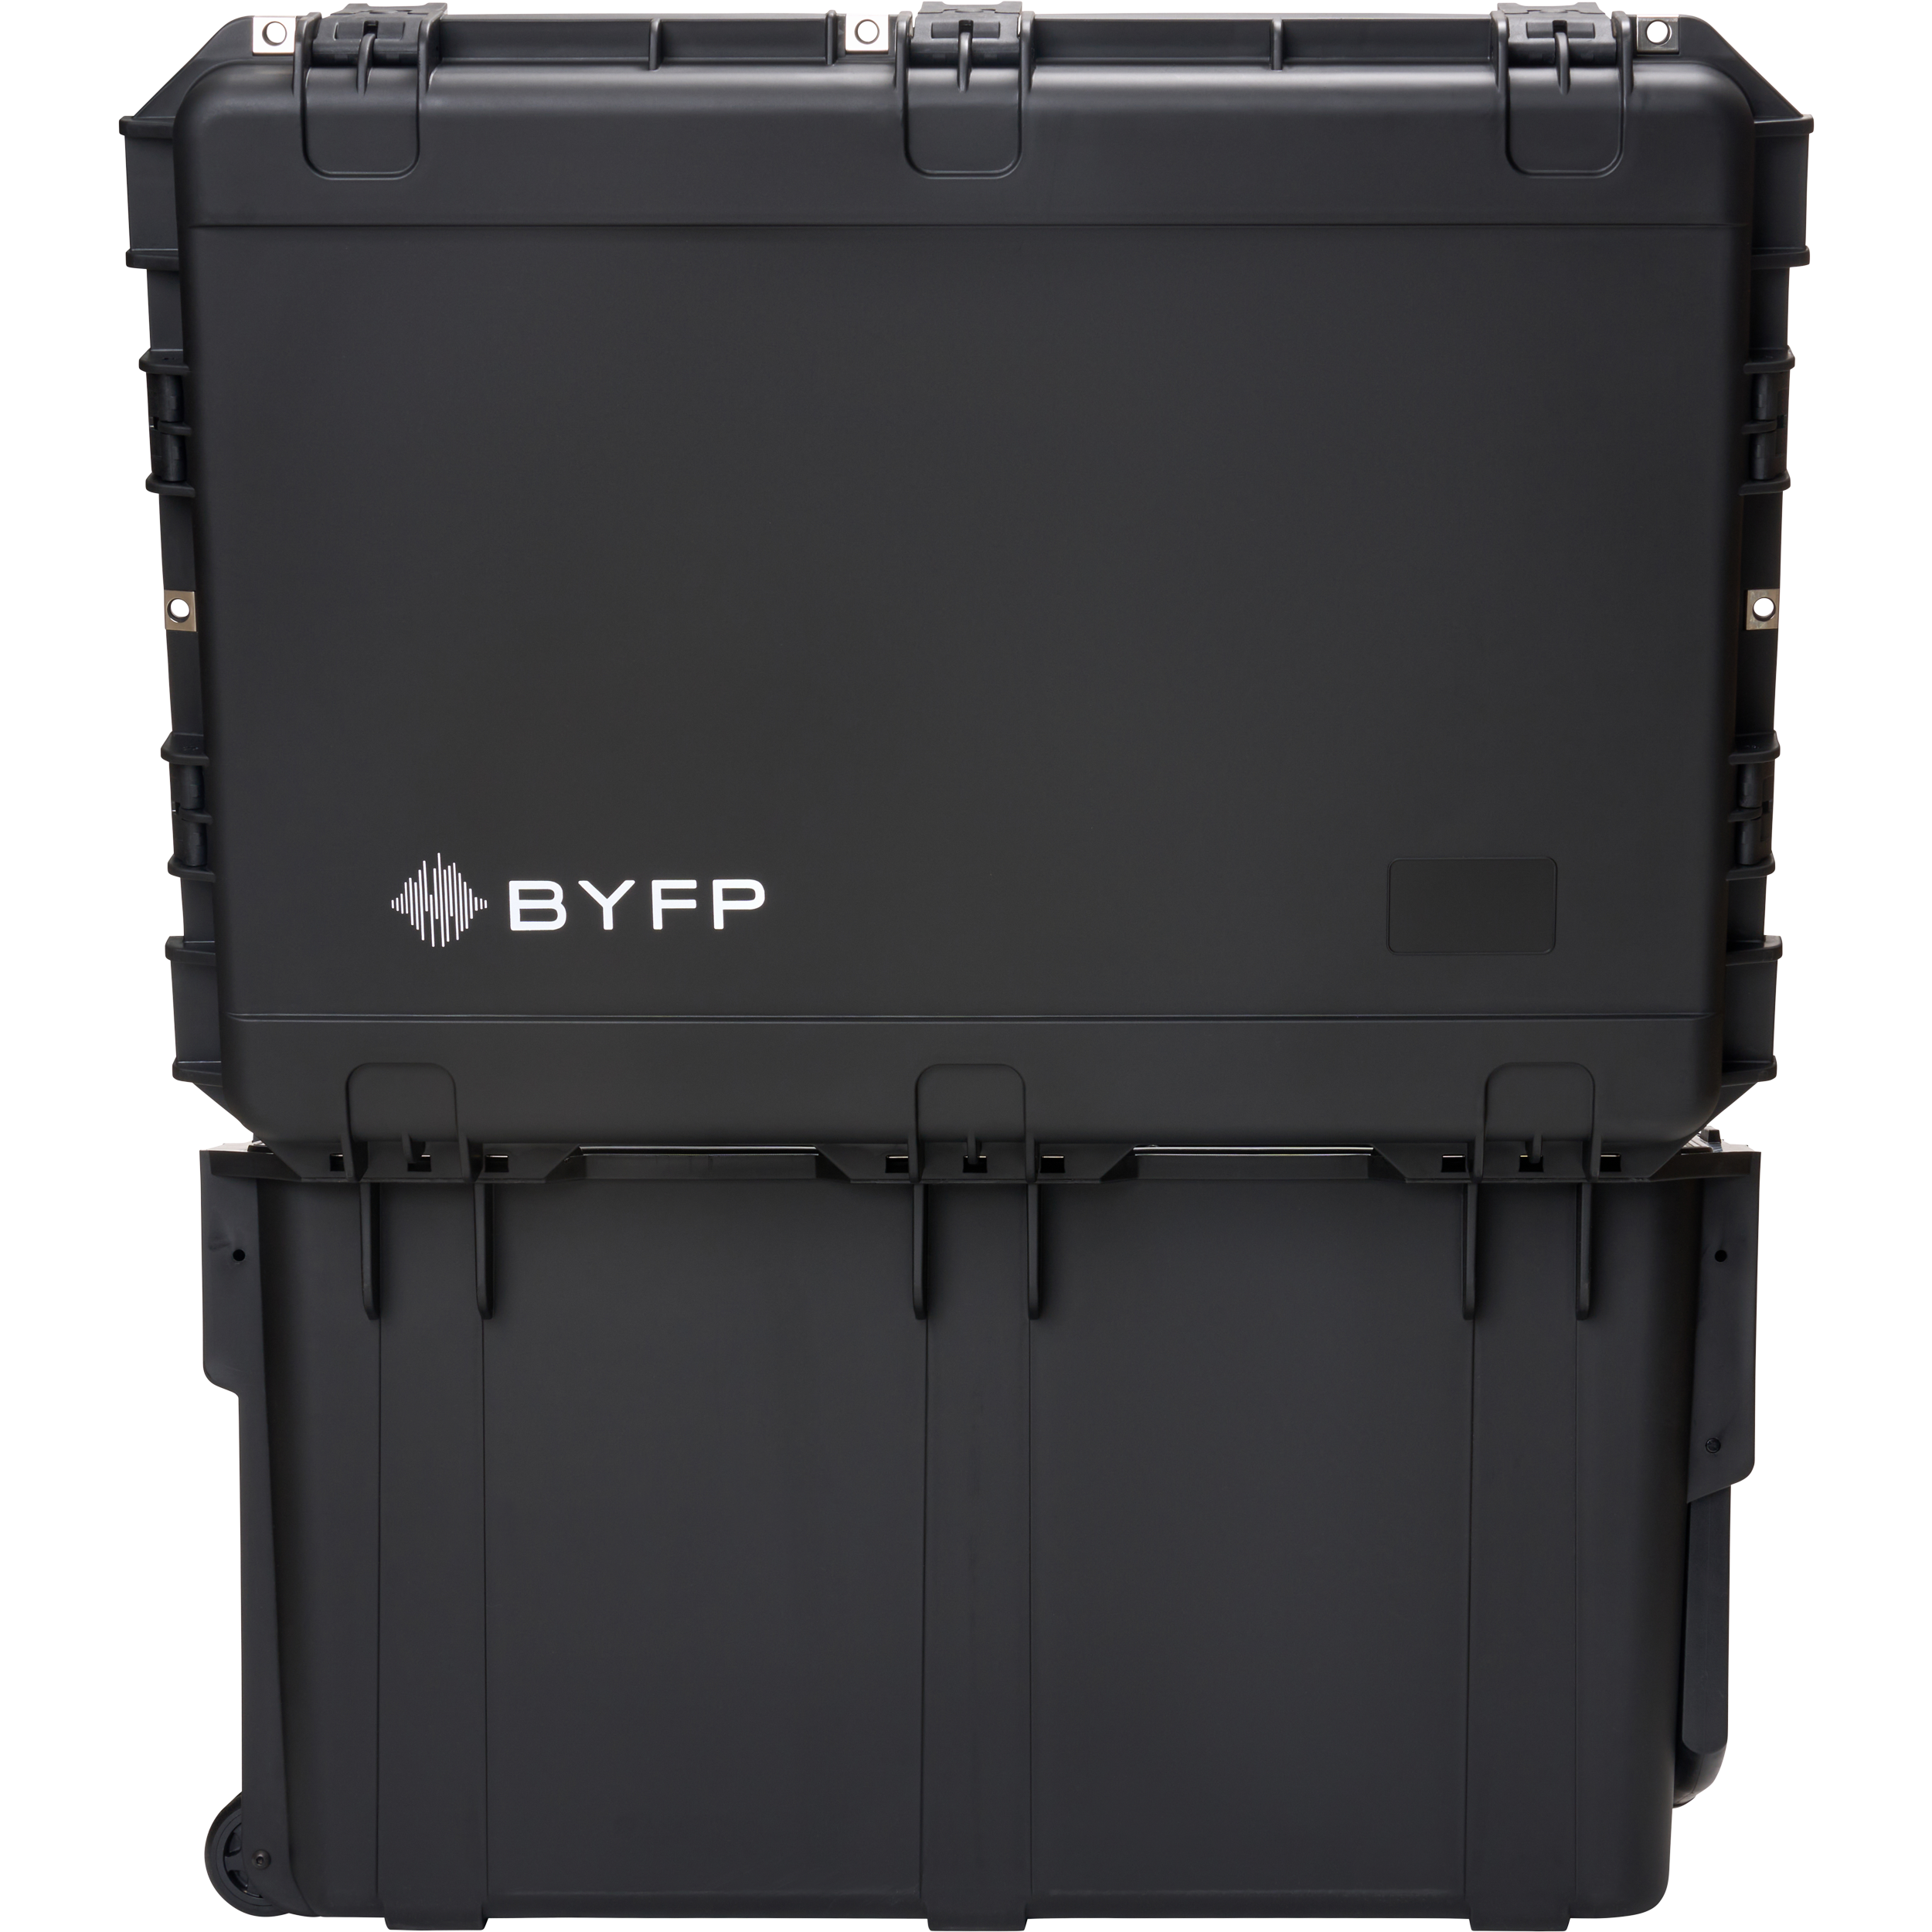 BYFP ipCase for 4x Chauvet Professional Color Strike M